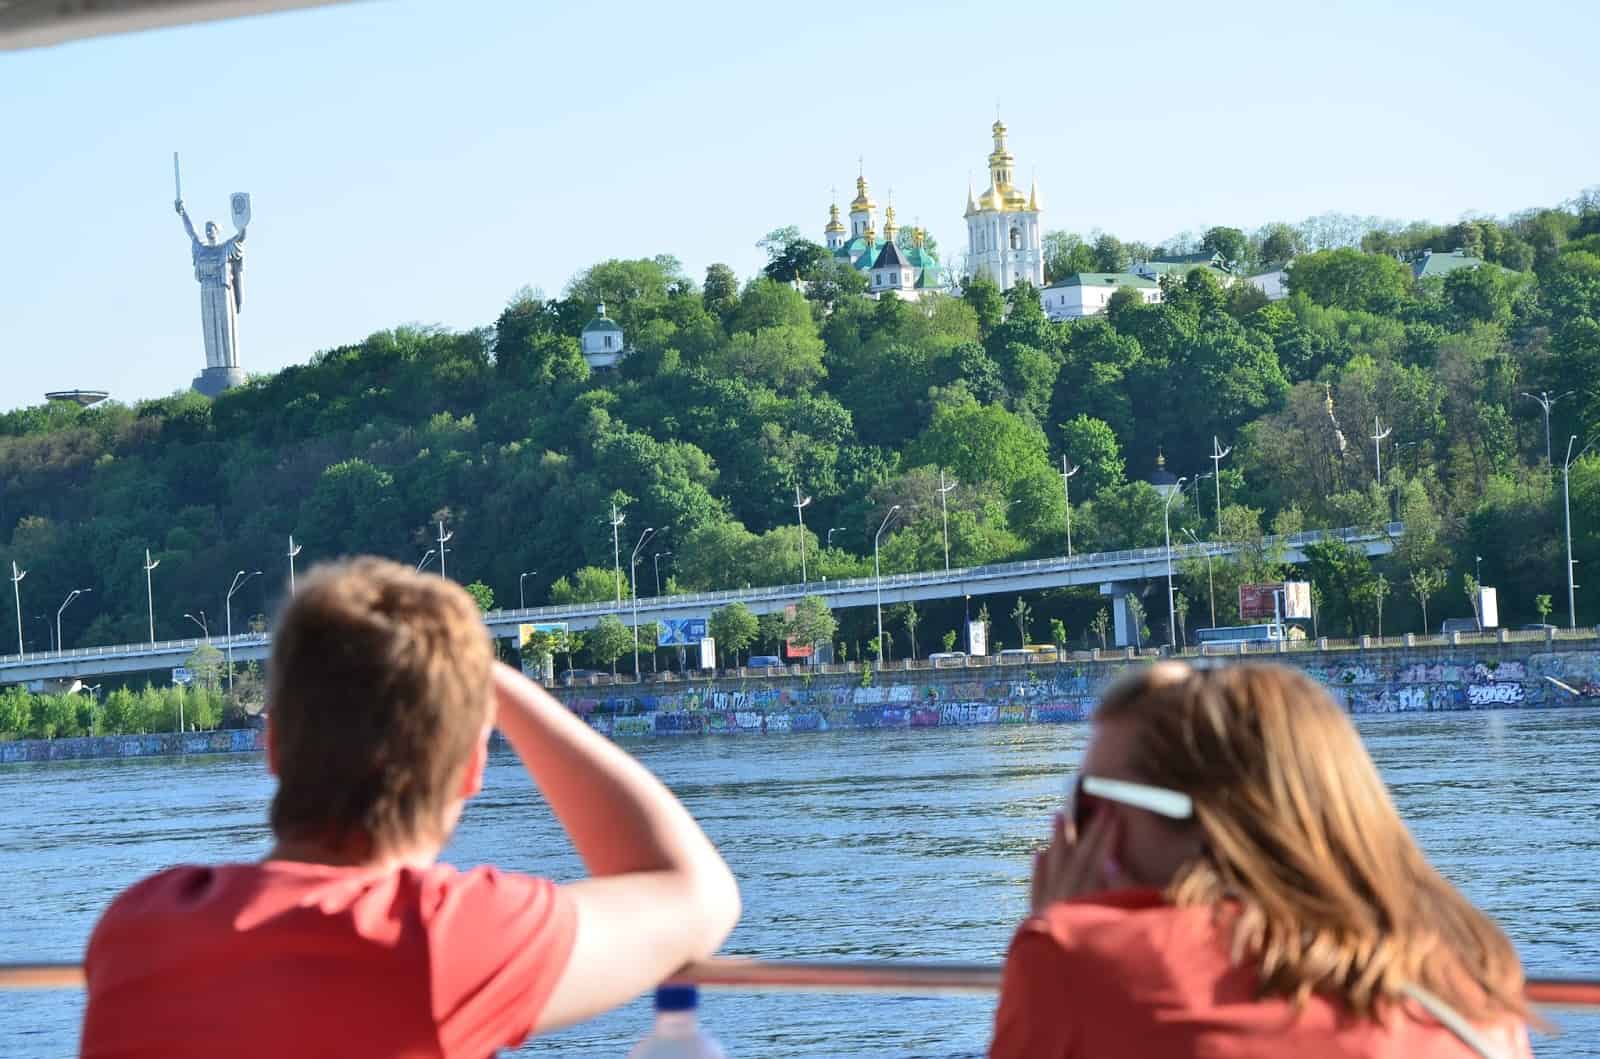 Dnieper River cruise in Kyiv, Ukraine